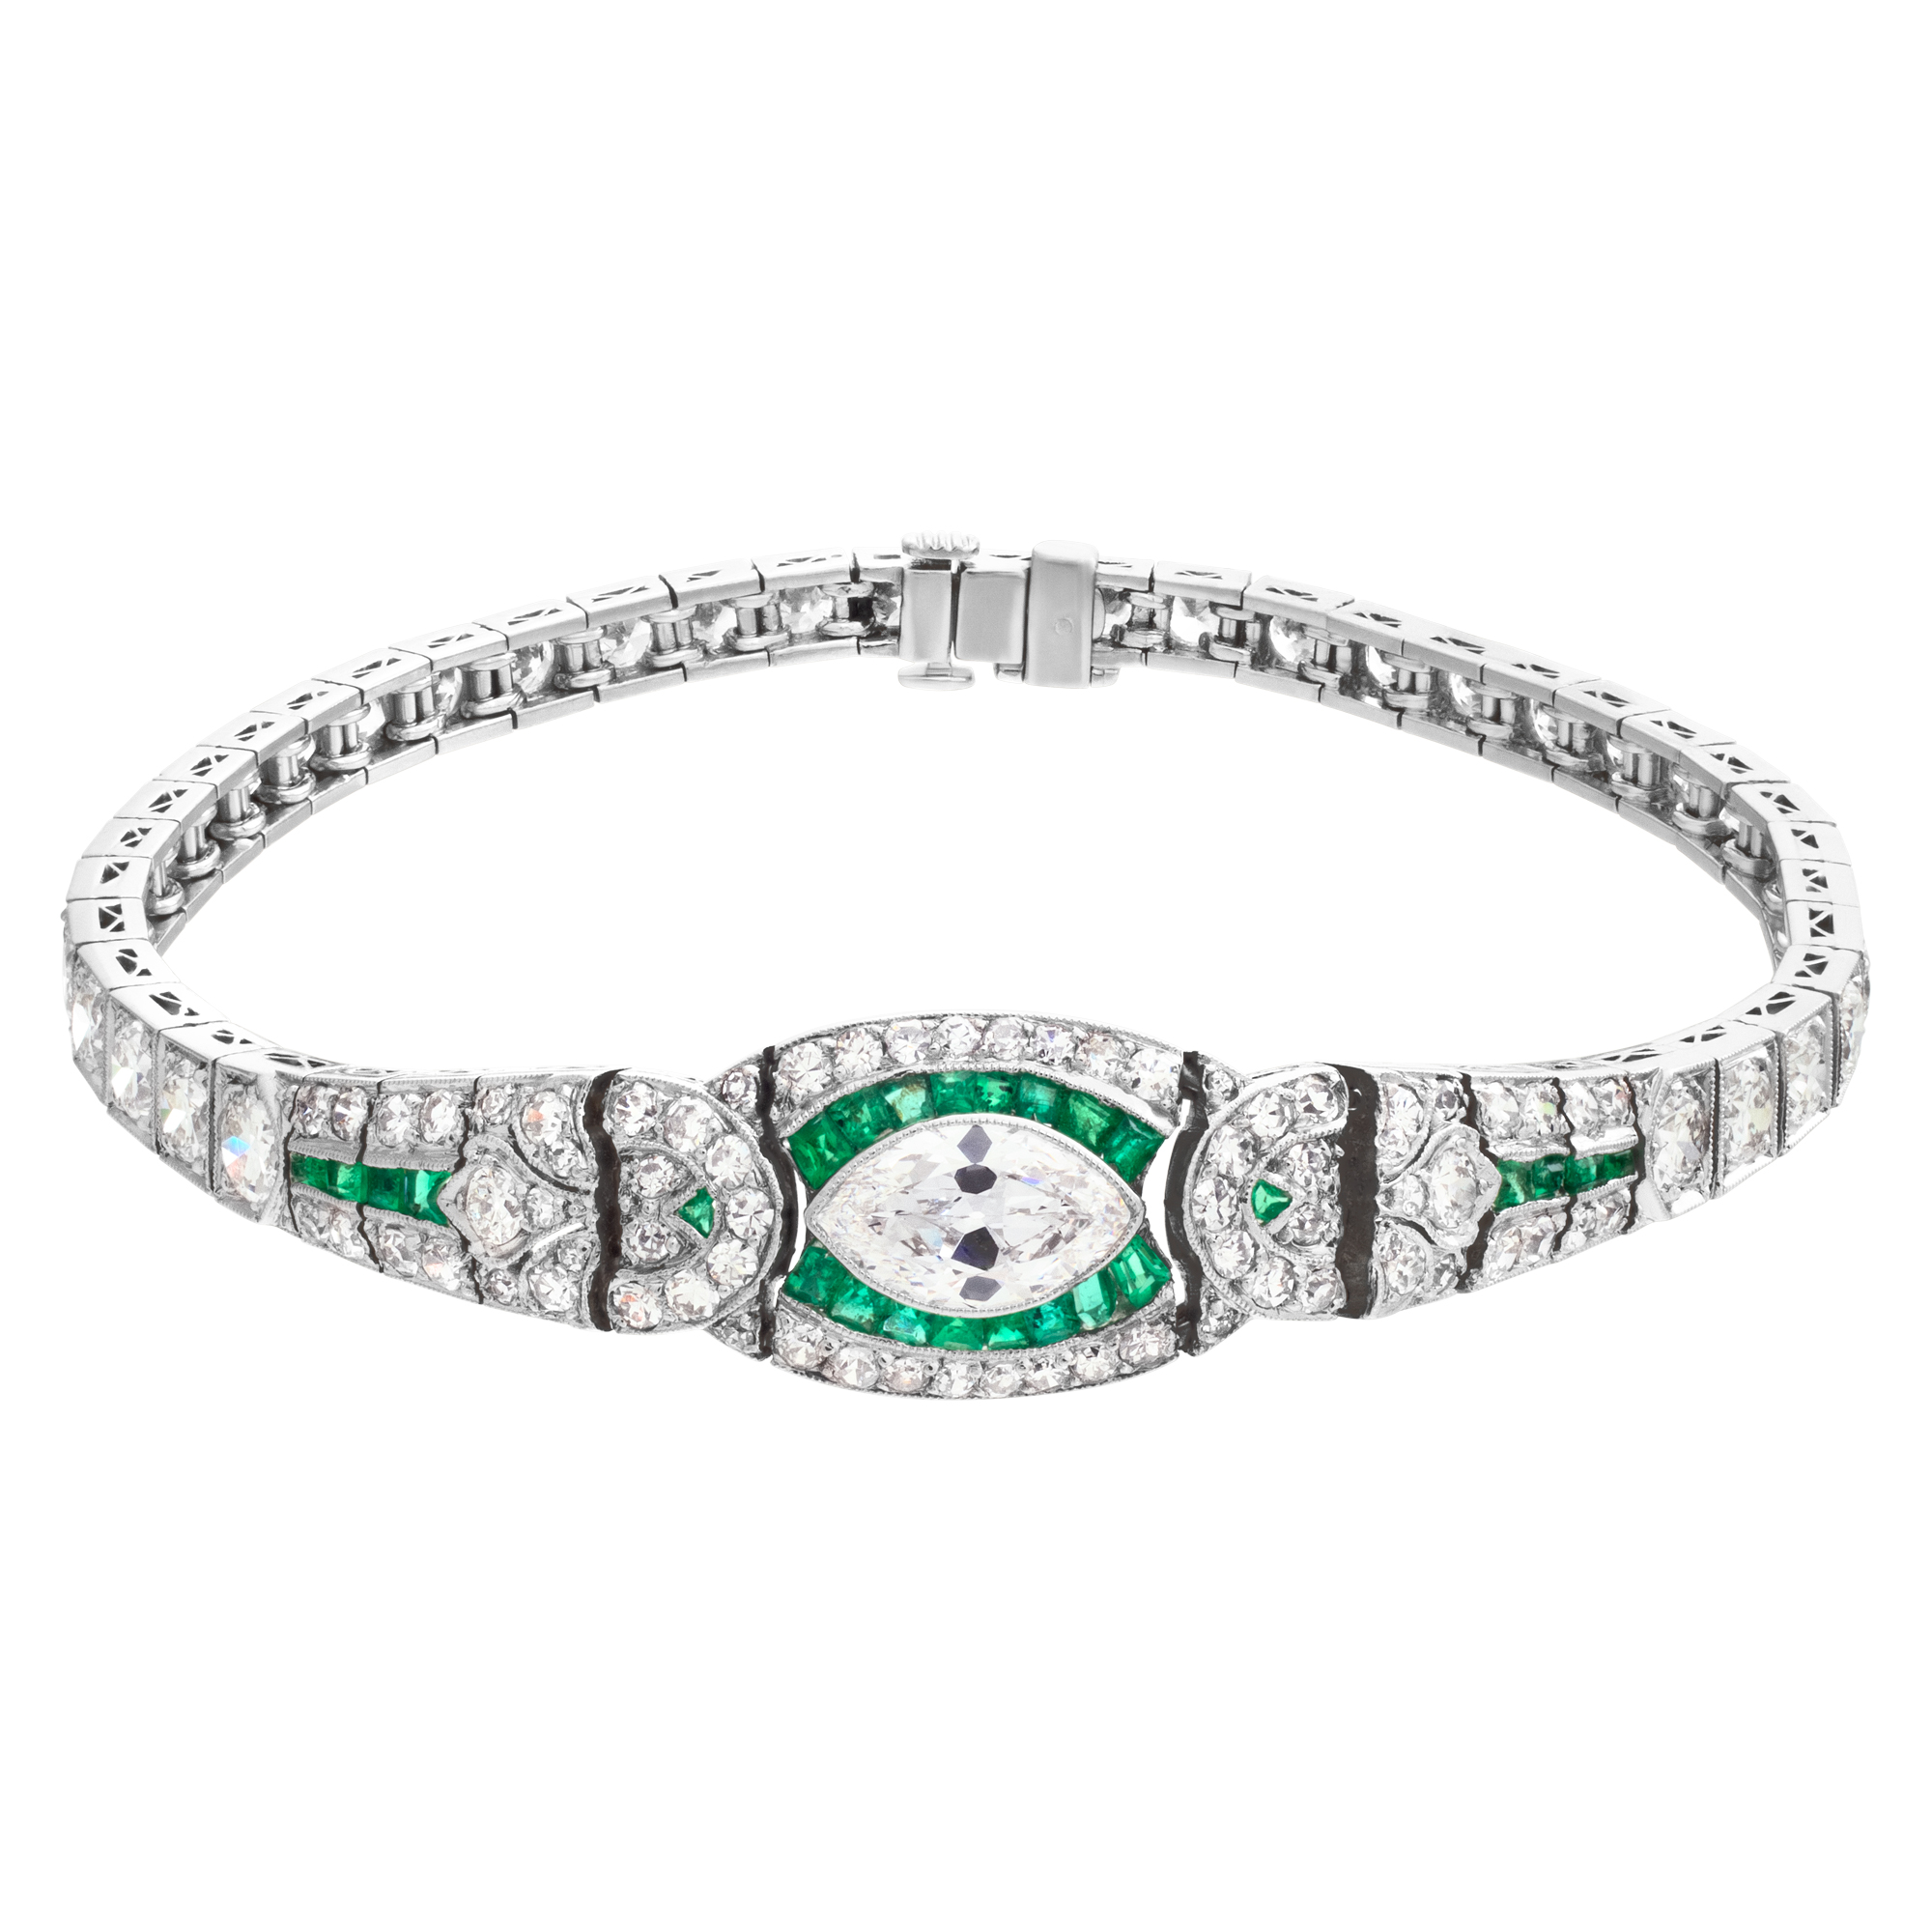 Vintage Art Deco Platinum Bracelet with  diamonds and stone cut emerald accents image 1